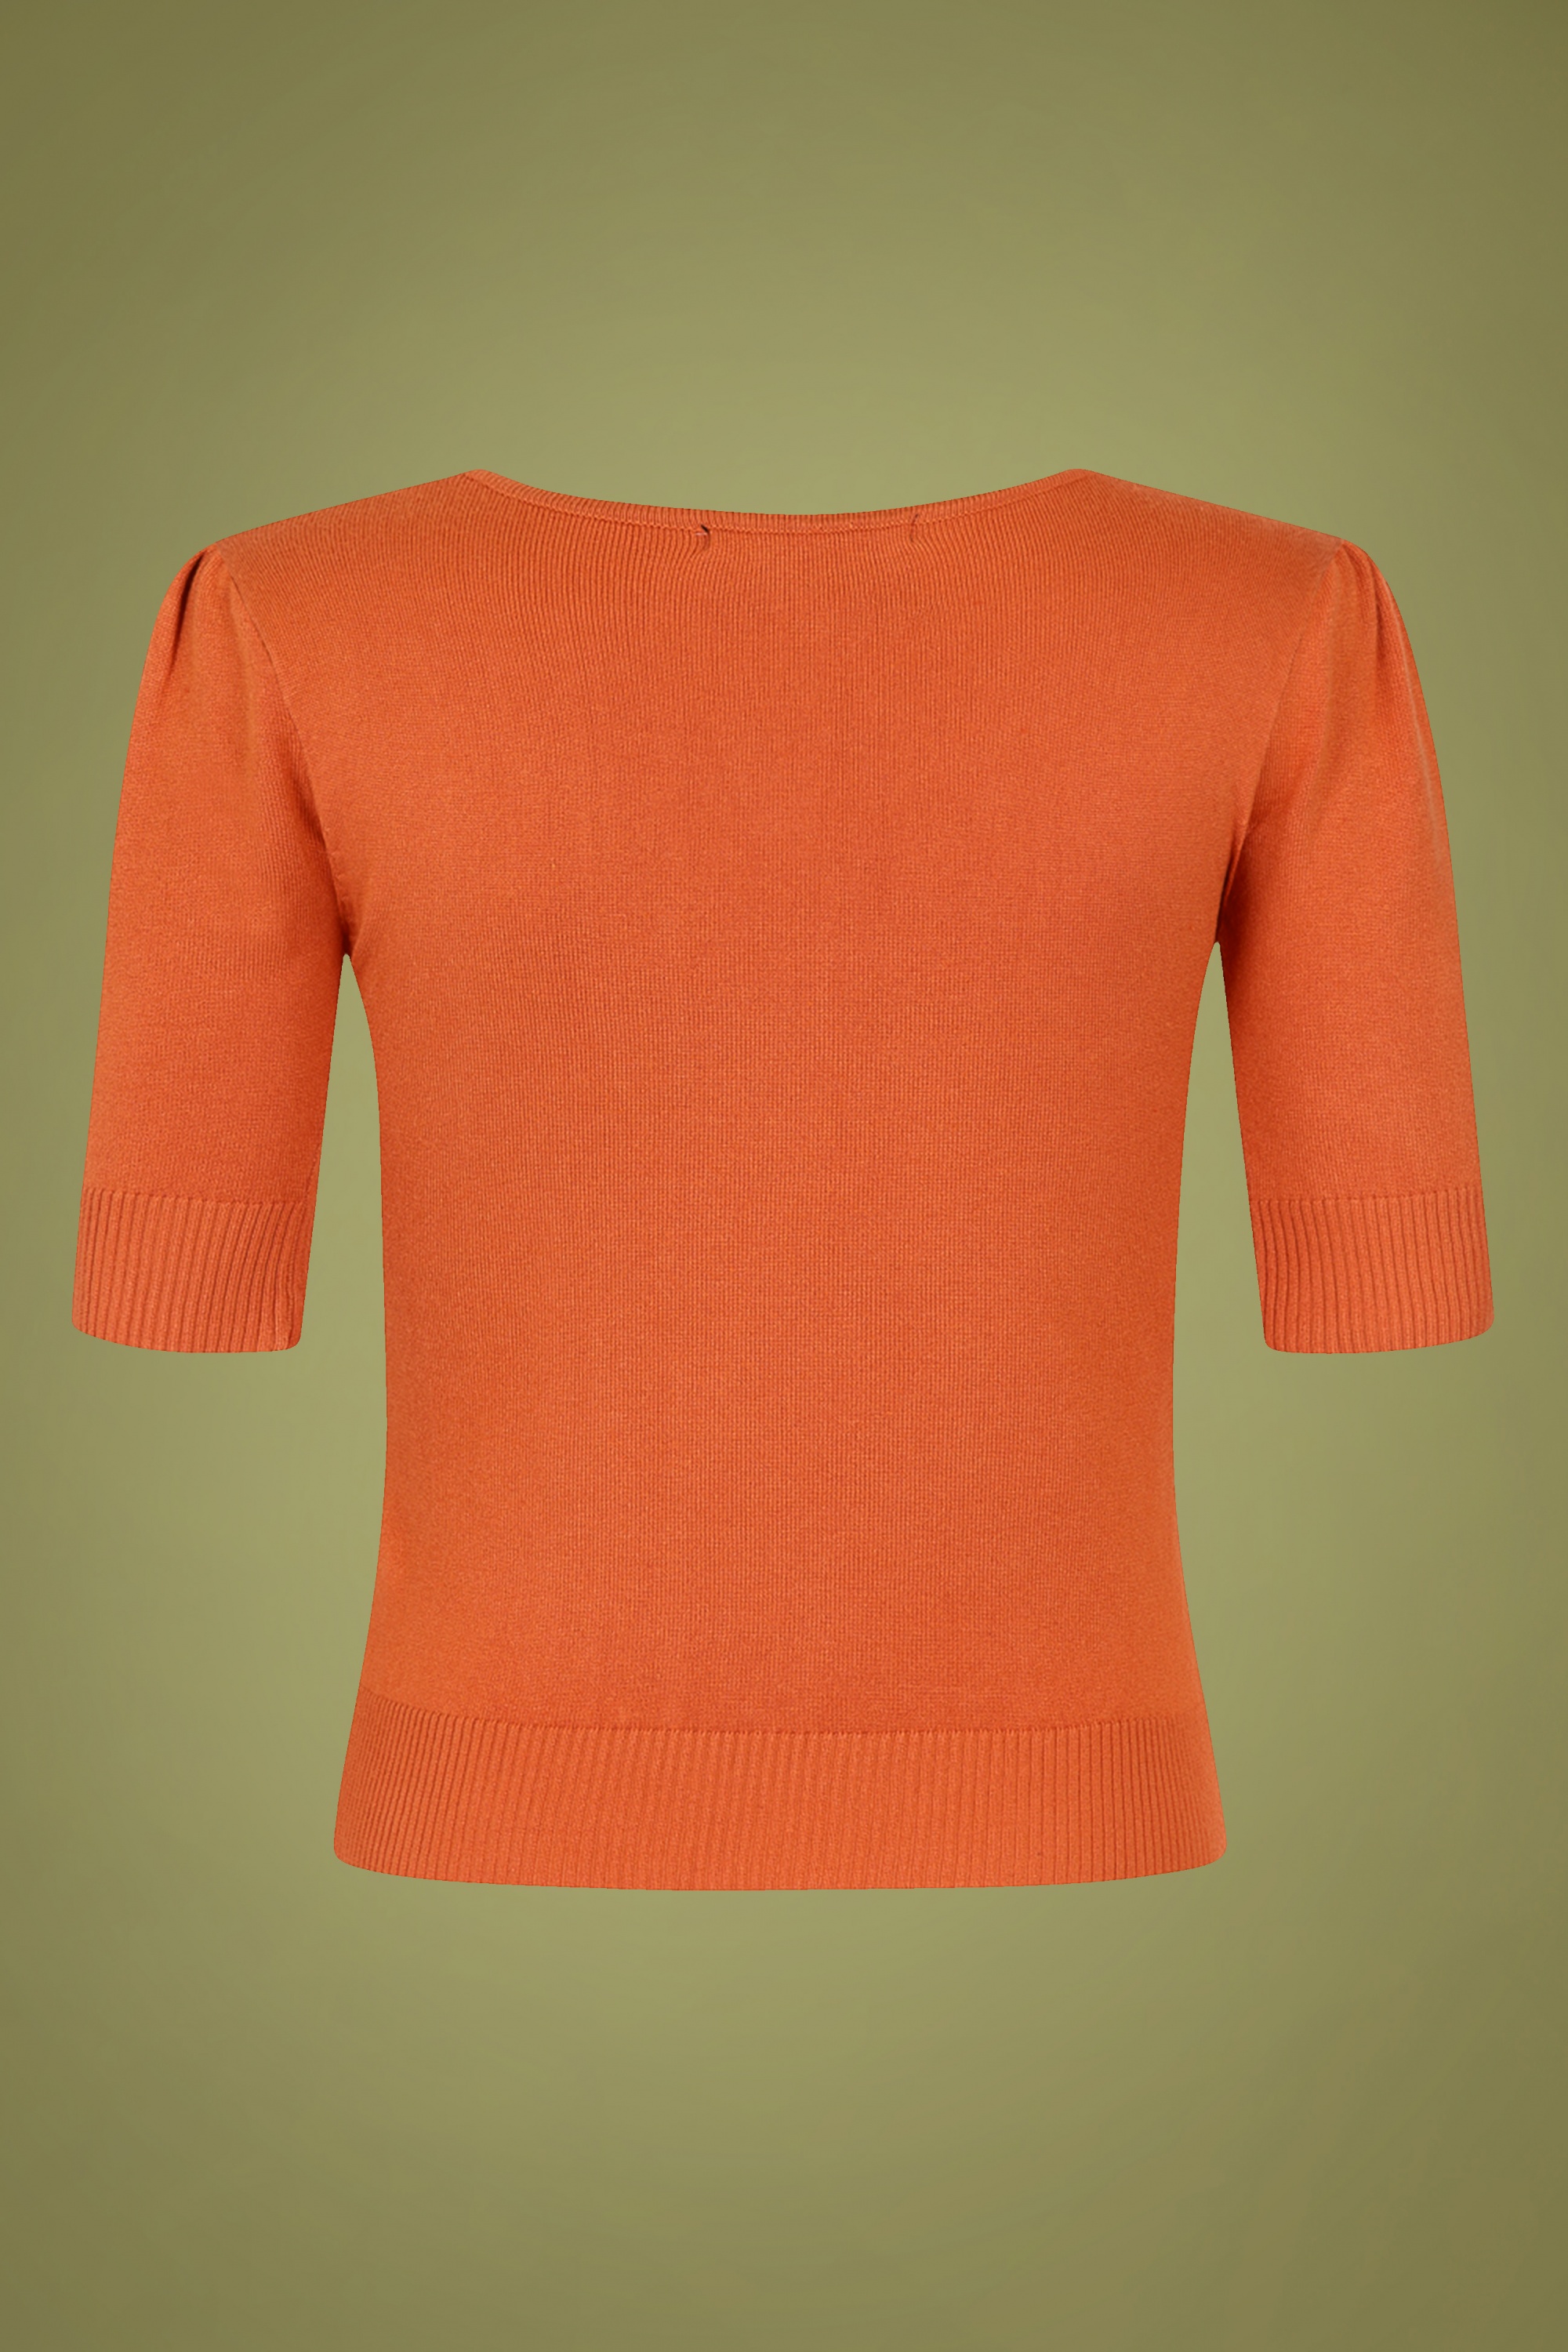 Collectif Clothing - Chrissie gebreide top in oranje 5